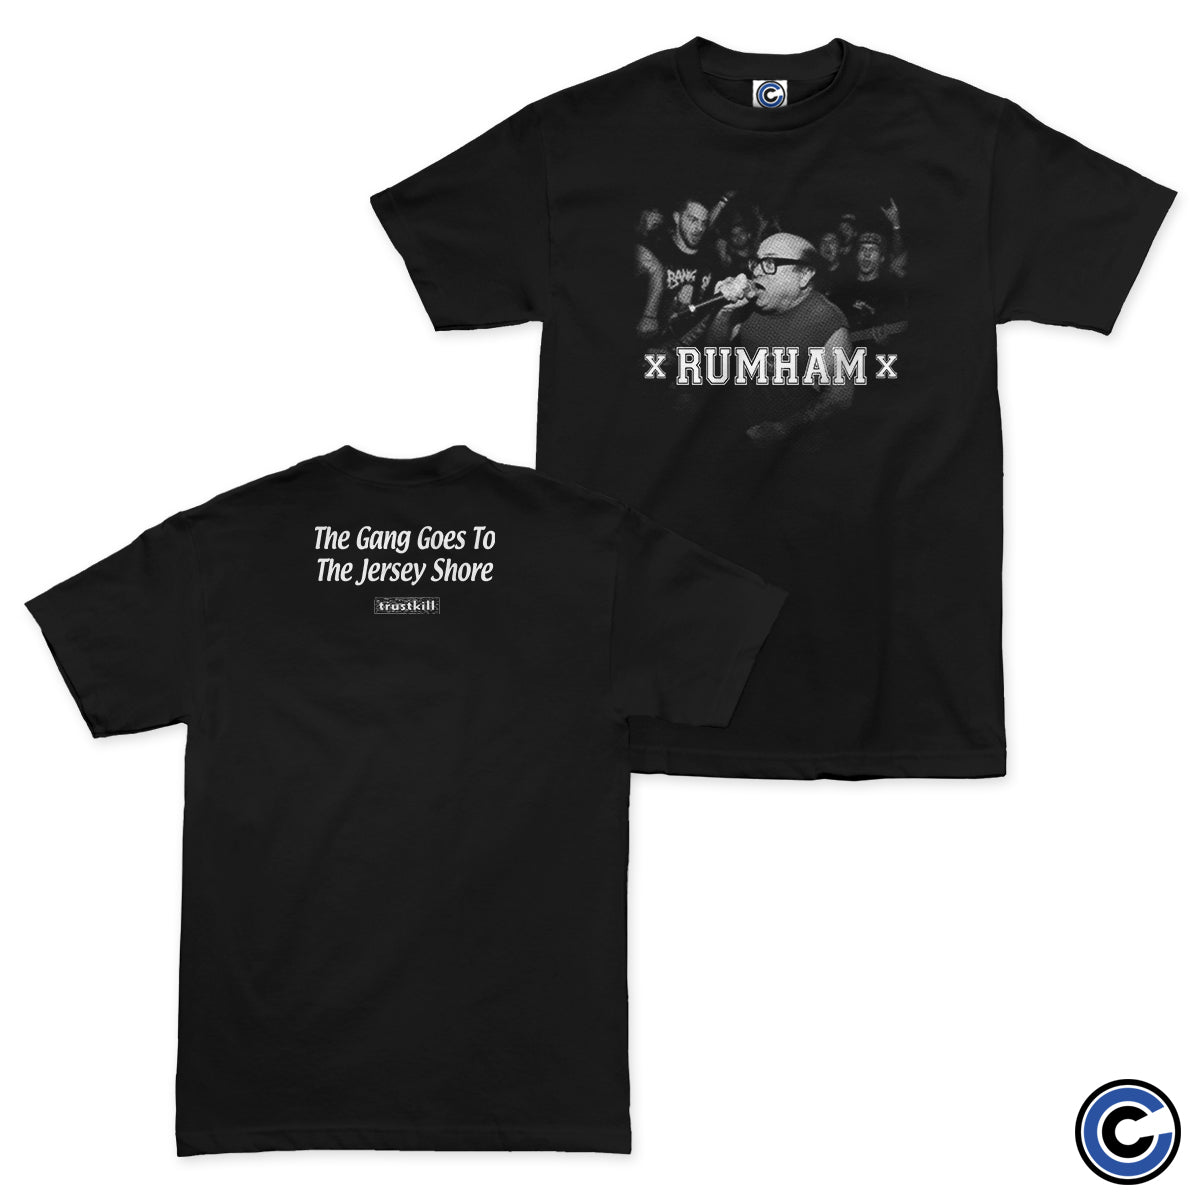 Trustkill Records "Rumham" Shirt